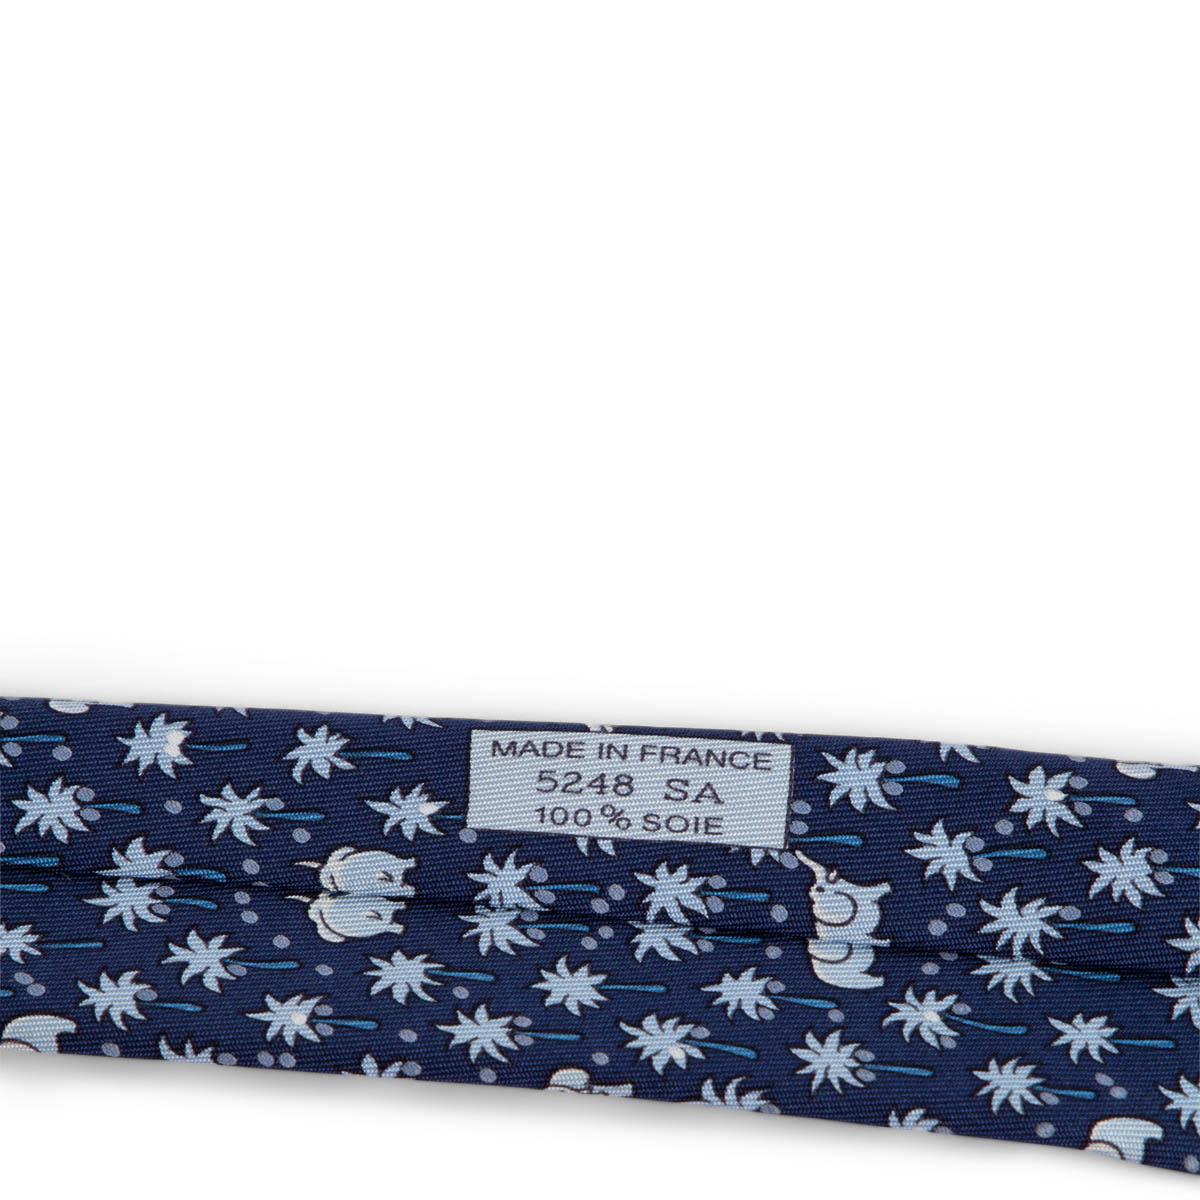 HERMES navy & blue silk twill 5248 ELEPHANT & PALM Tie 1